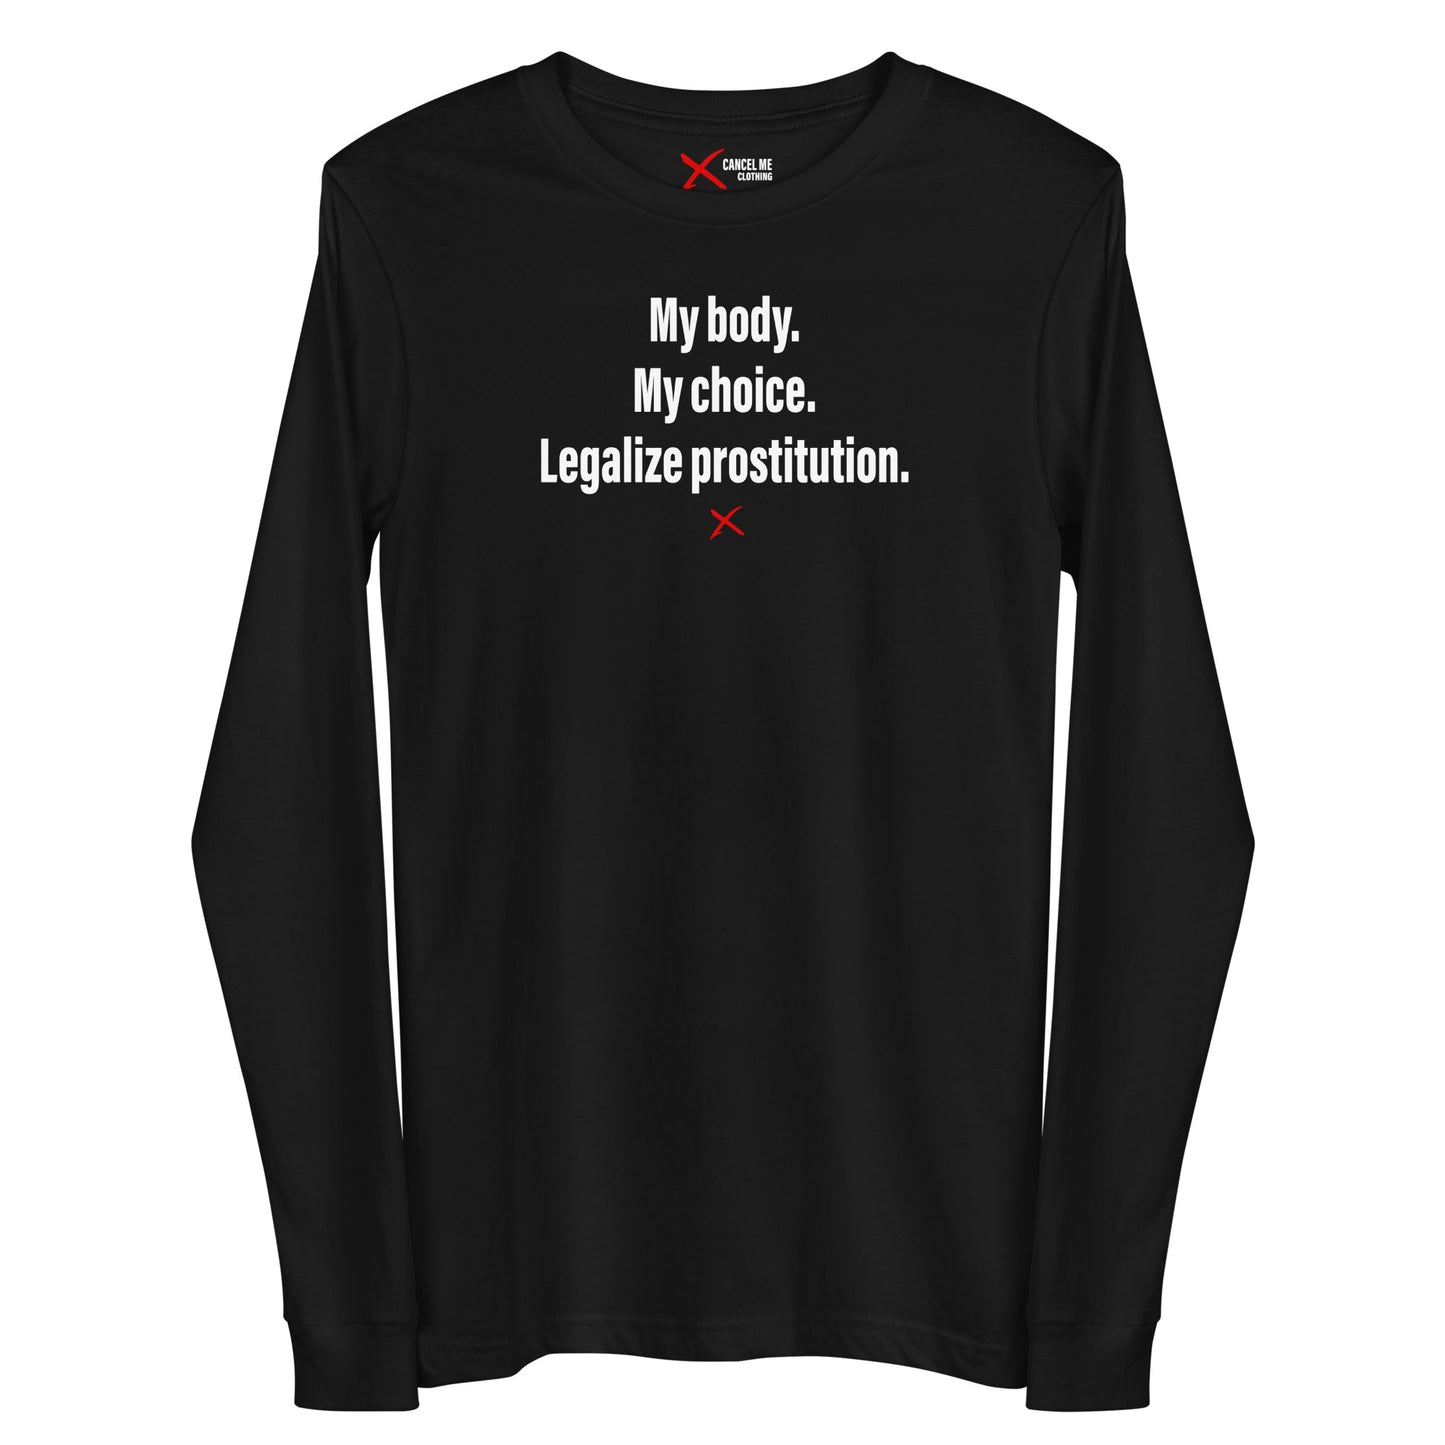 My body. My choice. Legalize prostitution. - Longsleeve